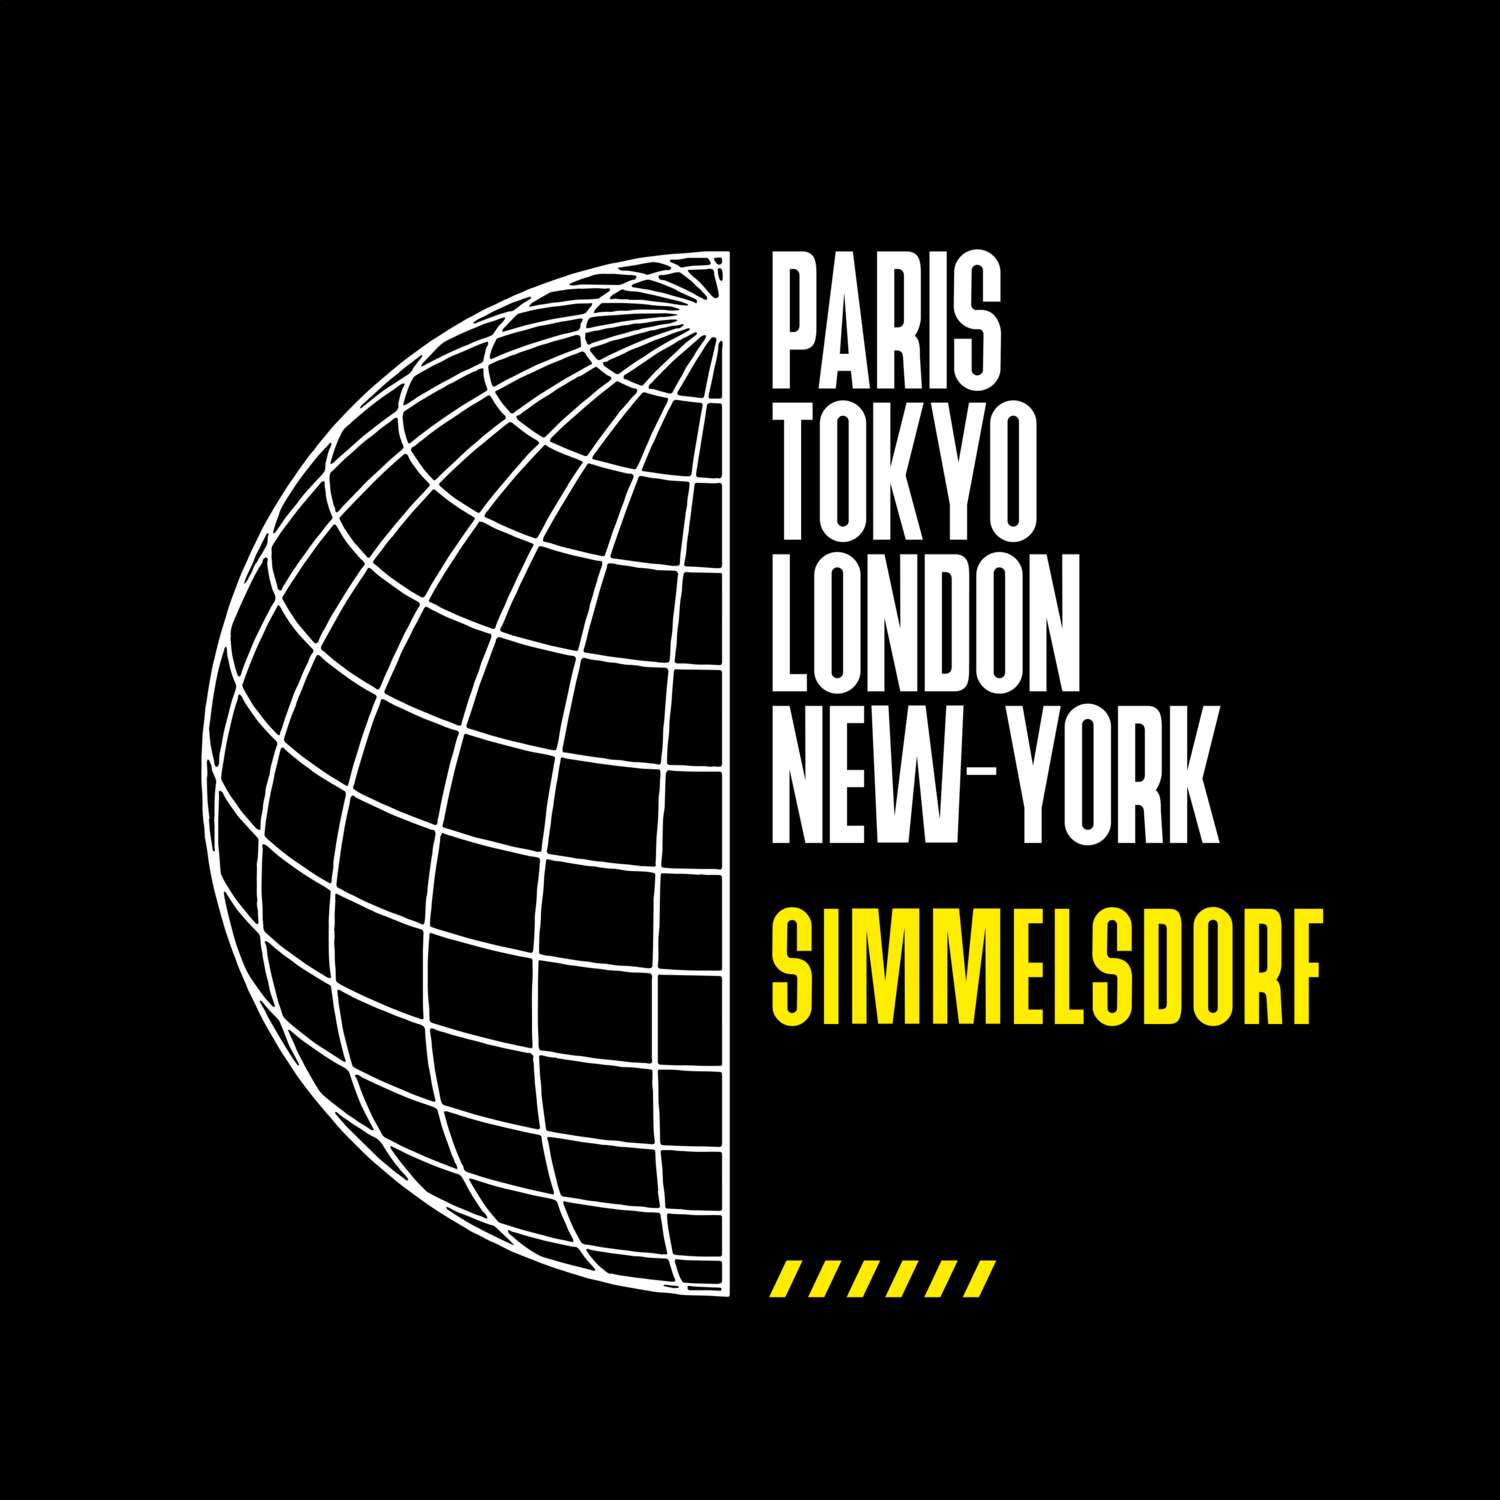 Simmelsdorf T-Shirt »Paris Tokyo London«